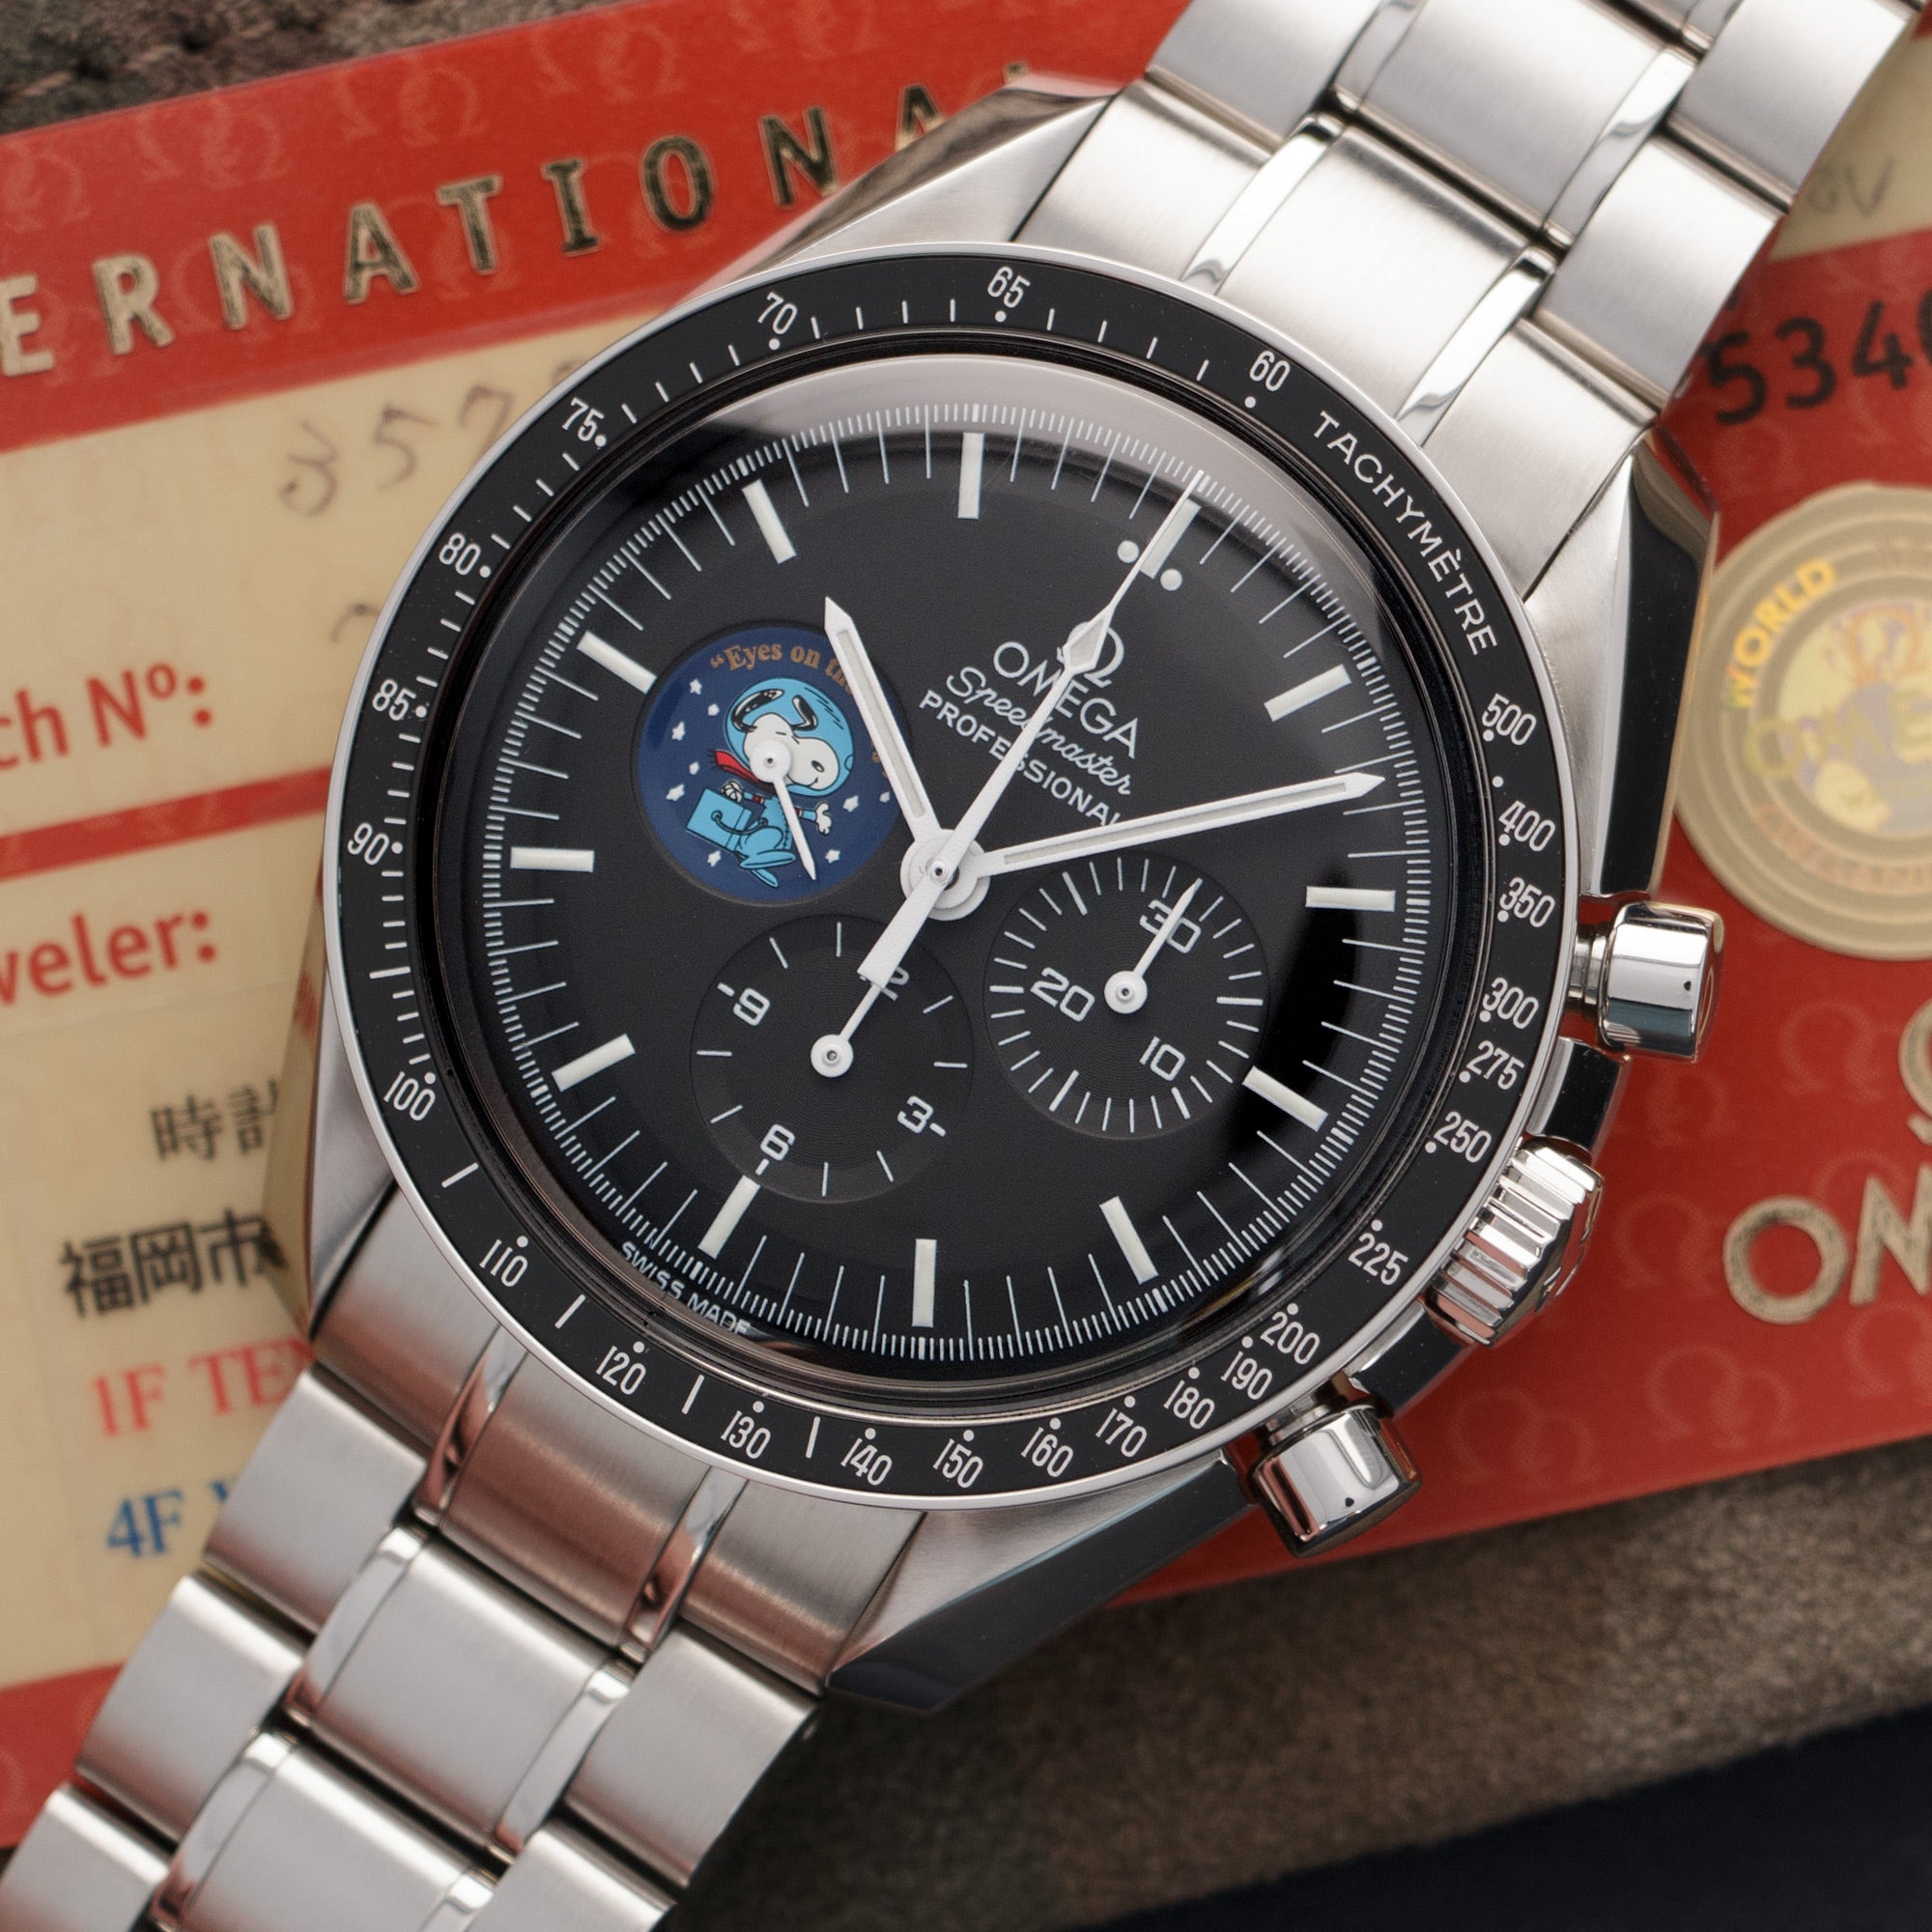 Omega - Omega Speedmaster Moonwatch Snoopy Award Watch Ref. 3578.51.00 - The Keystone Watches